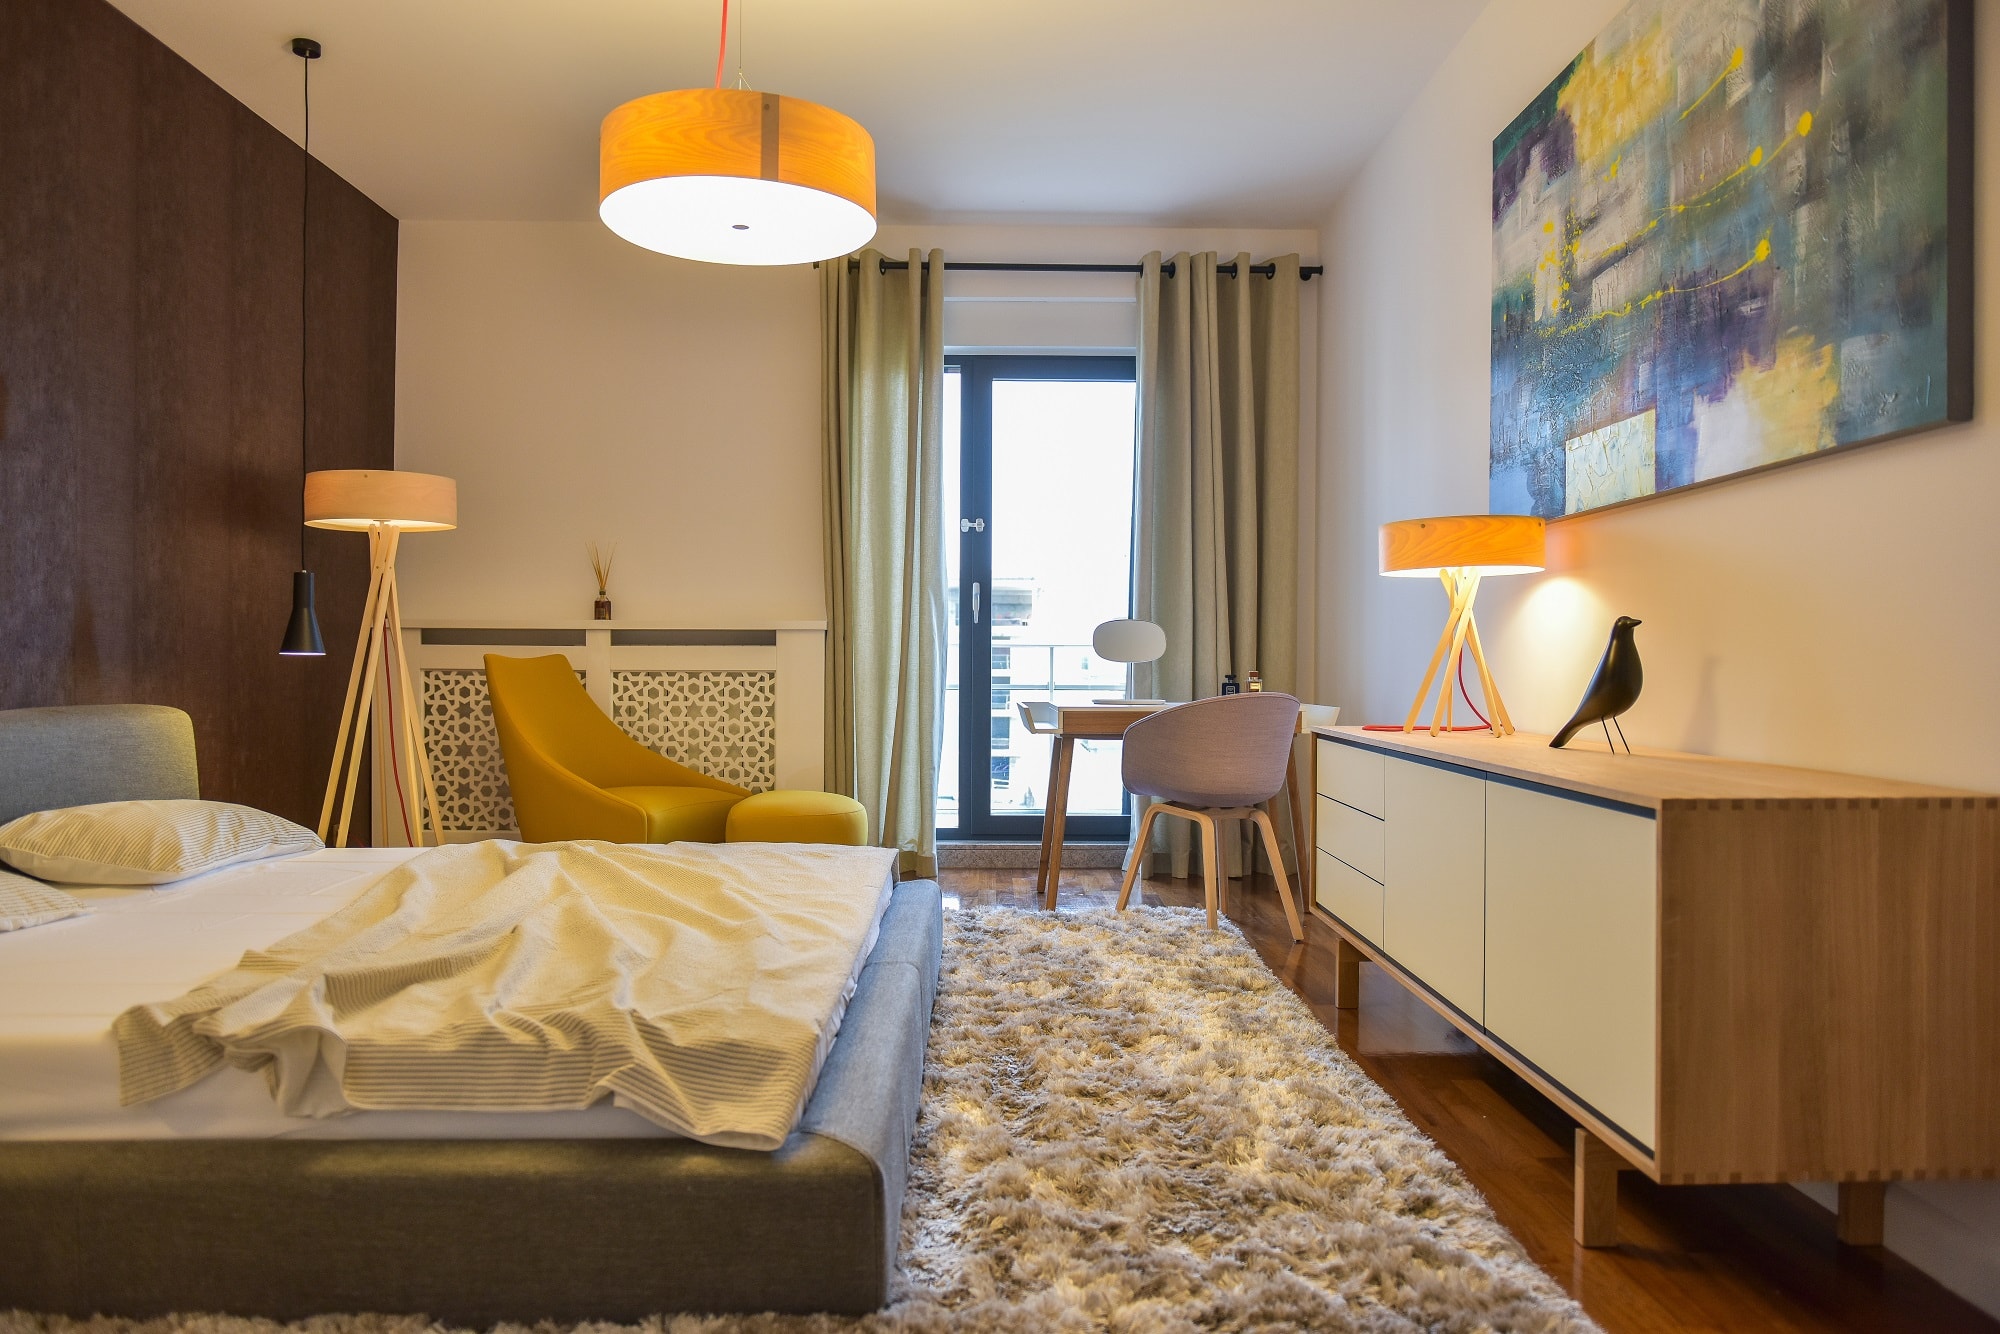 dormitor-matrimonial-new-scandinavian-design-interior-kiwistudio